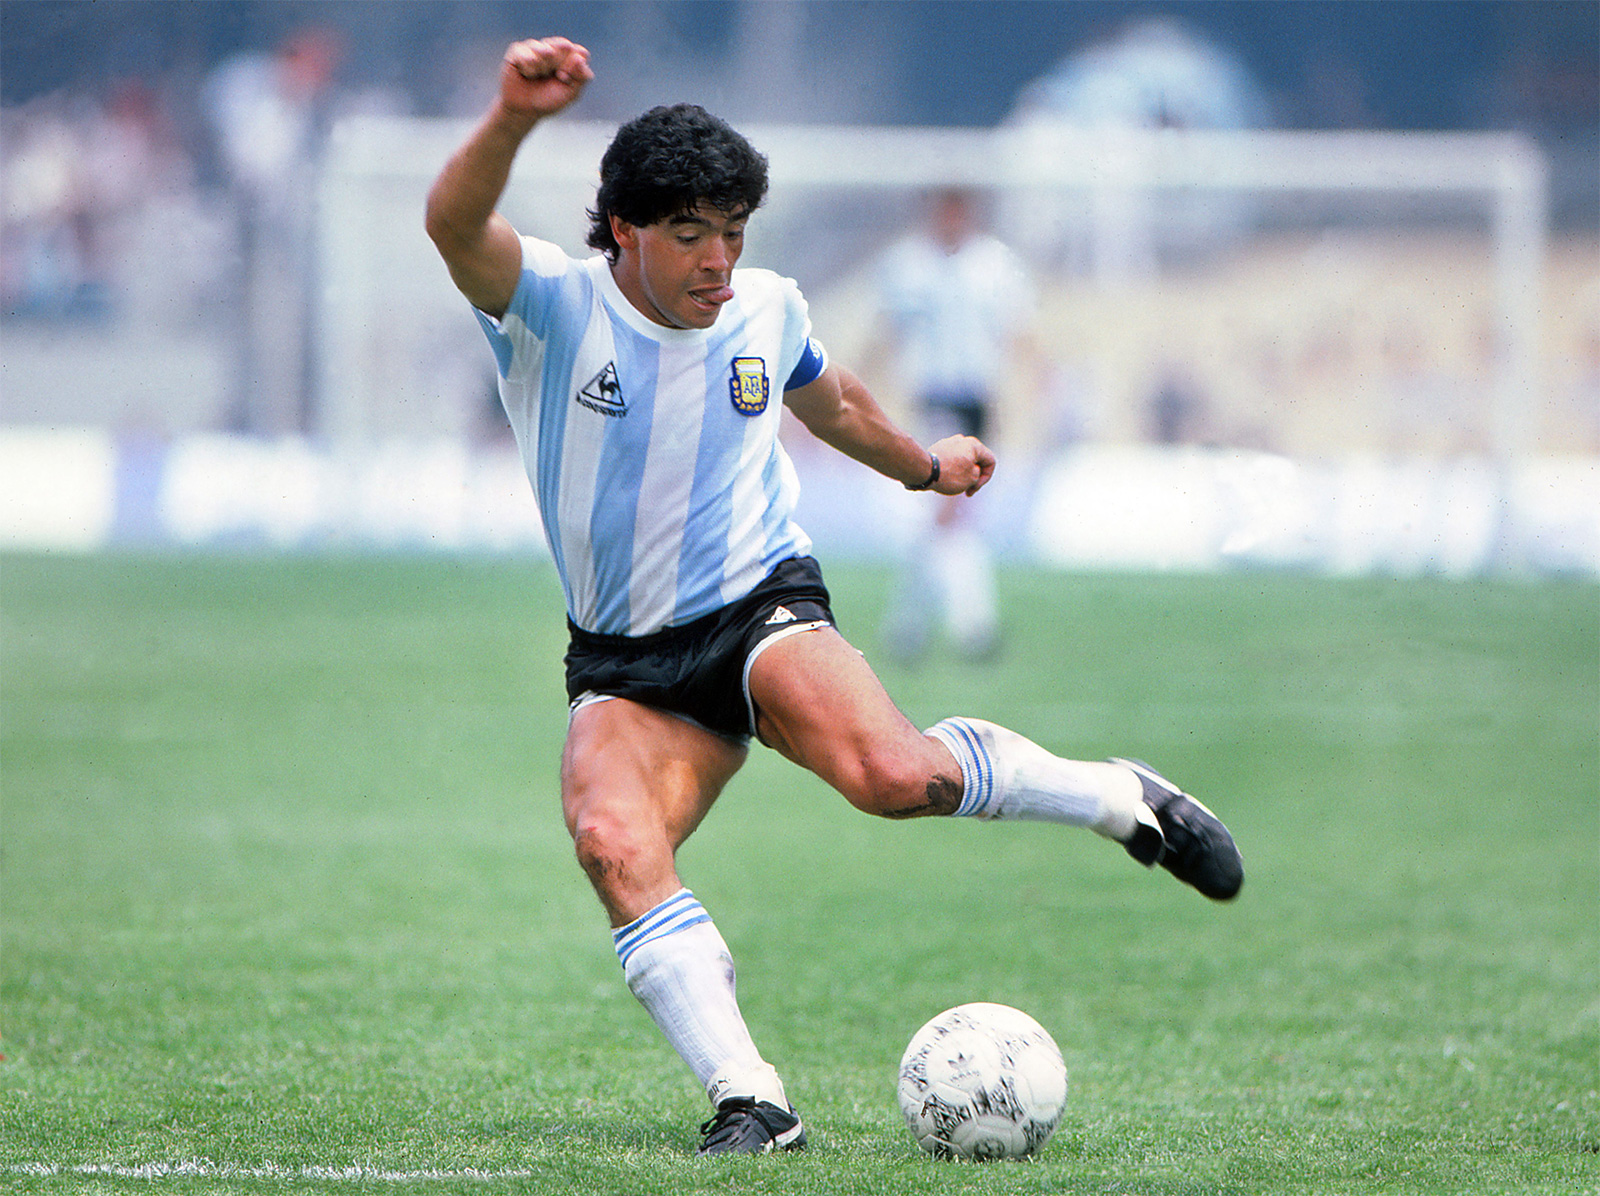 Diego Armando Maradona fallece por paro respiratorio